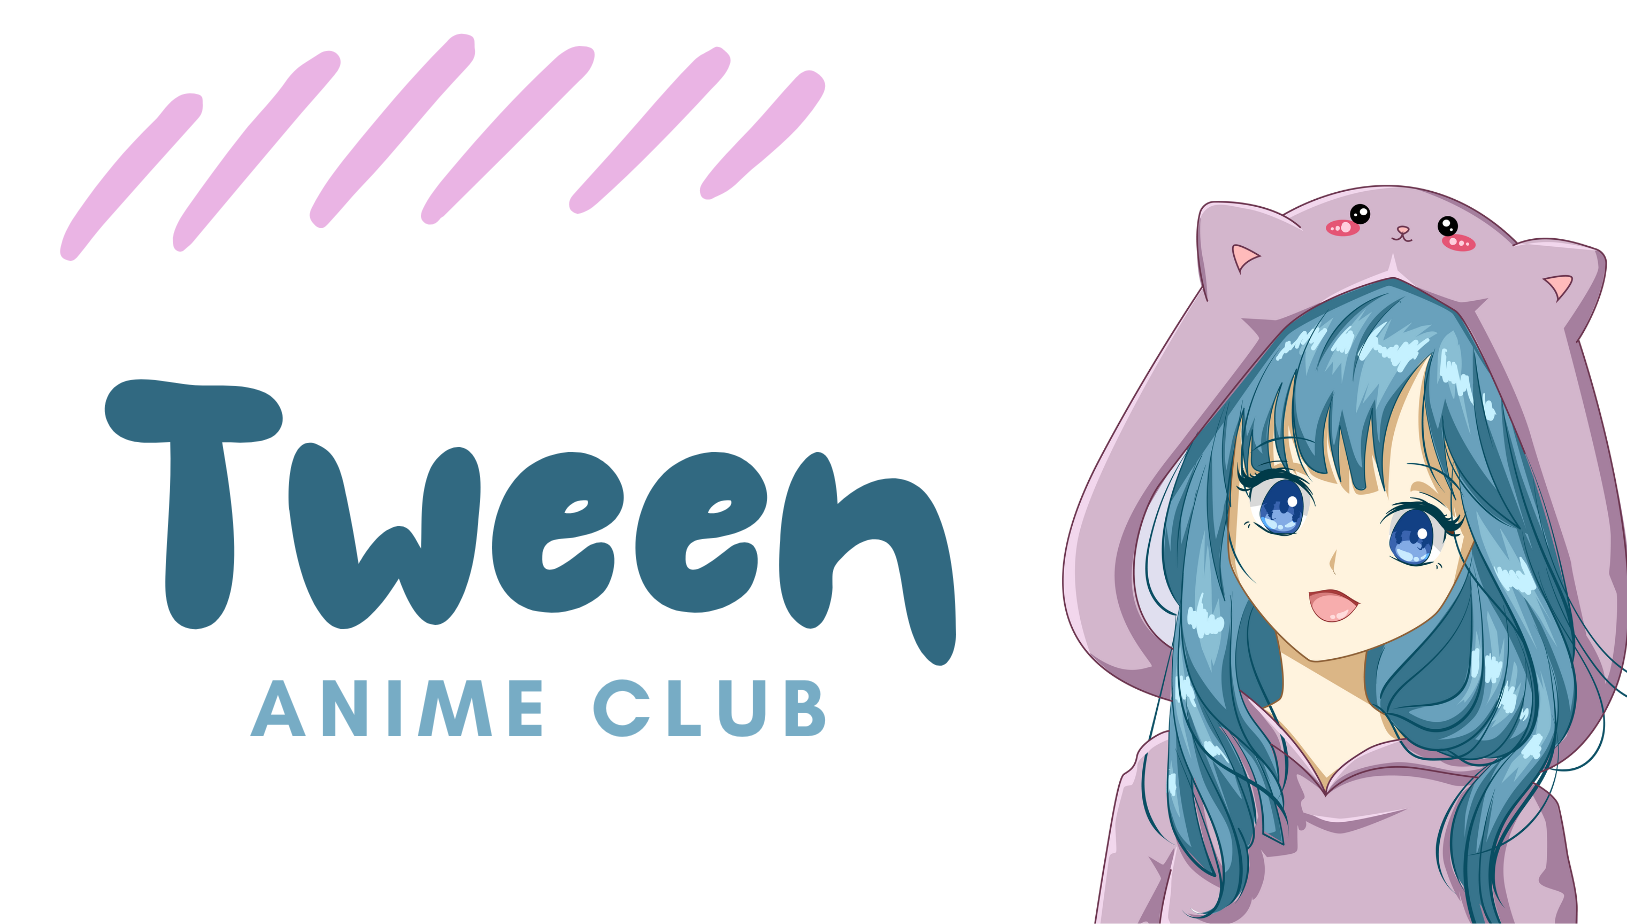 Anime Club for Tweens